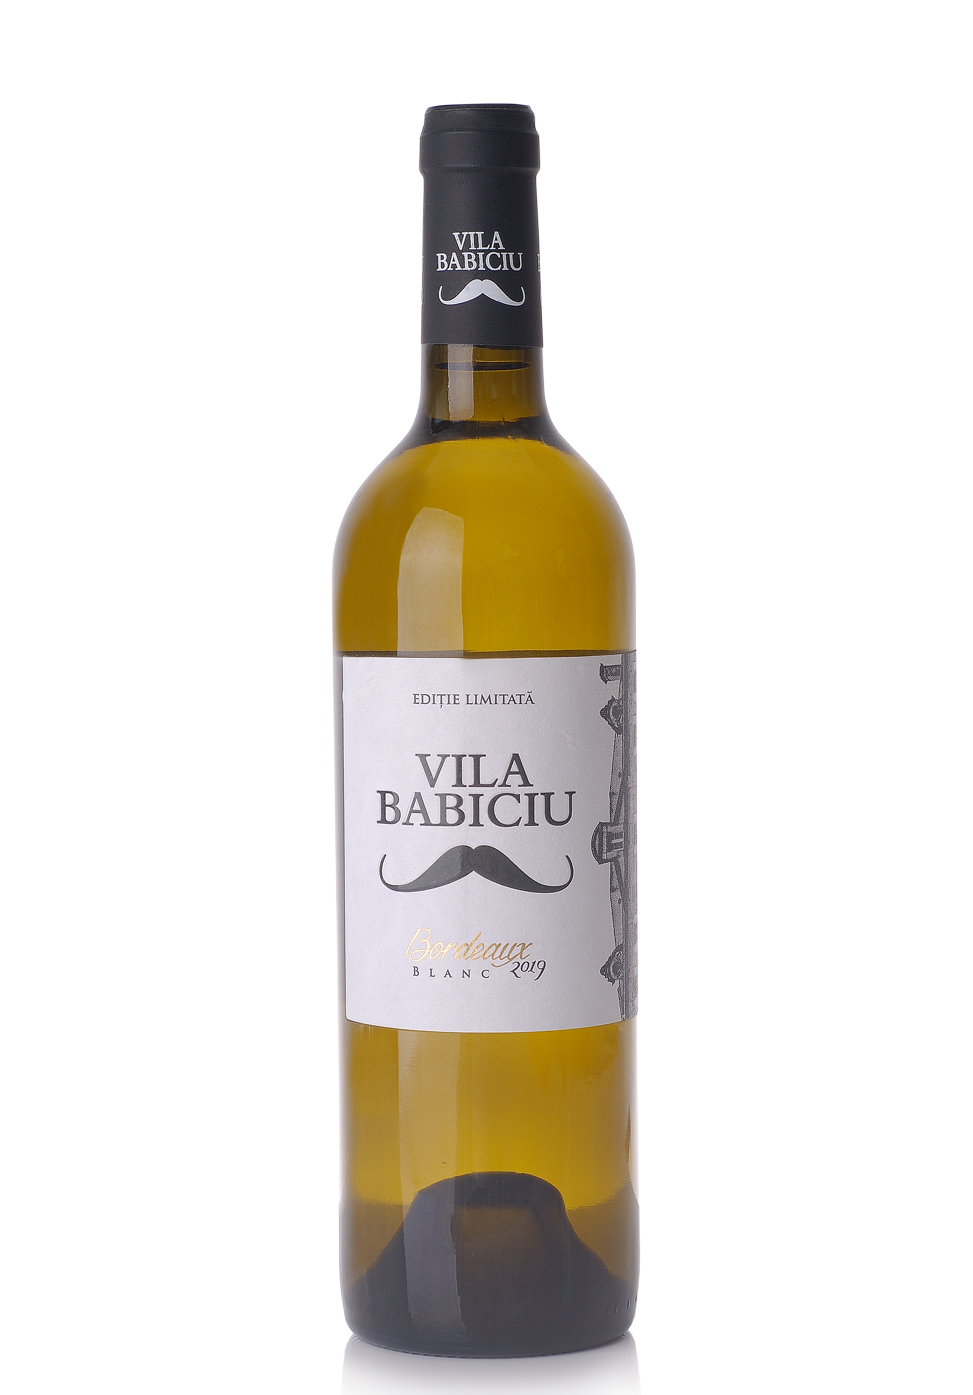 Vin Vila Babiciu Bordeaux Blanc 2018, Editie limitata (0.75L)